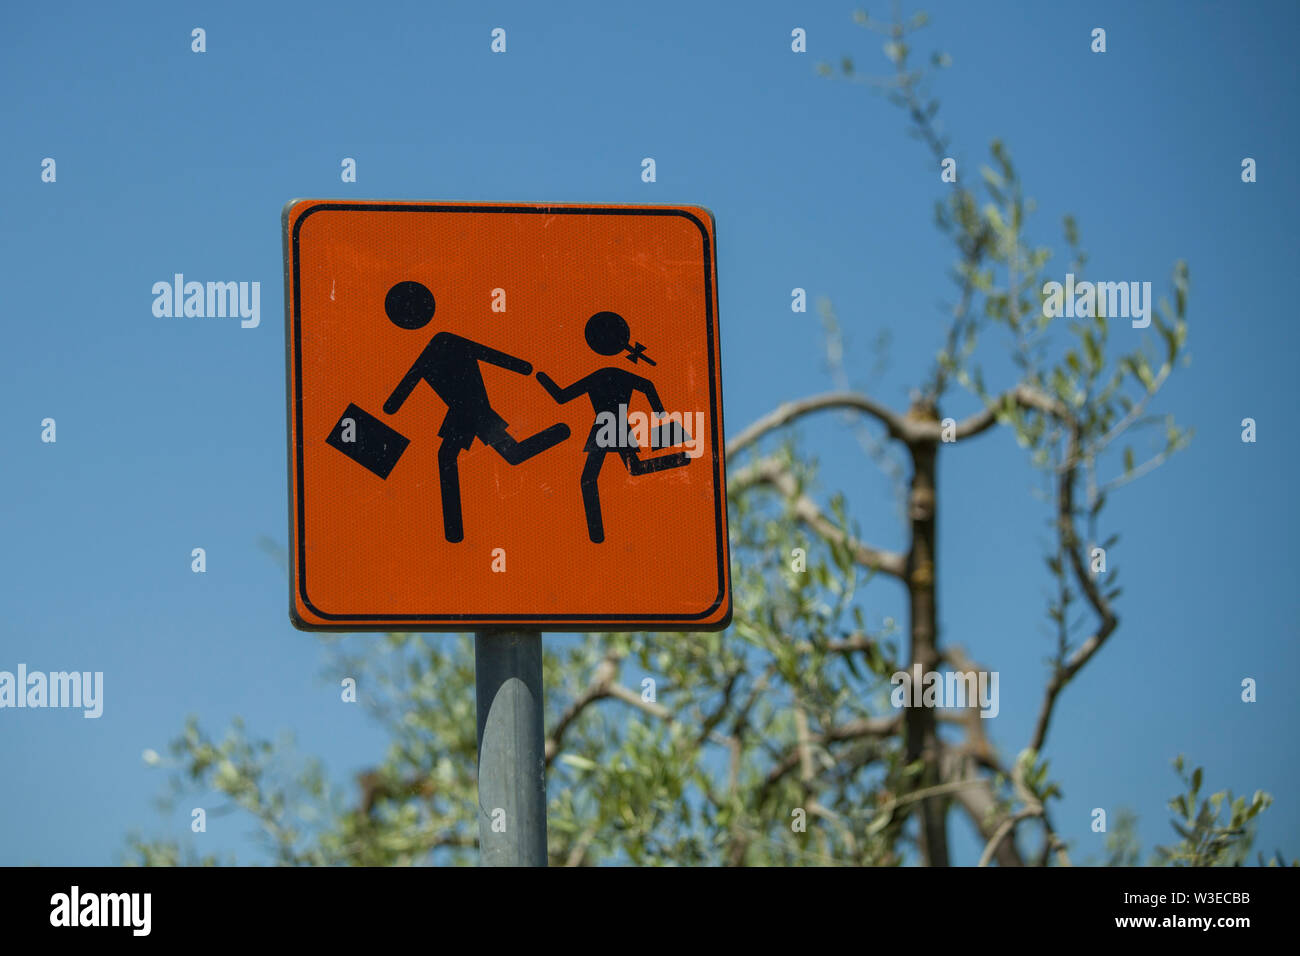 Children crossing the road, Italian traffic sign Stock Photo